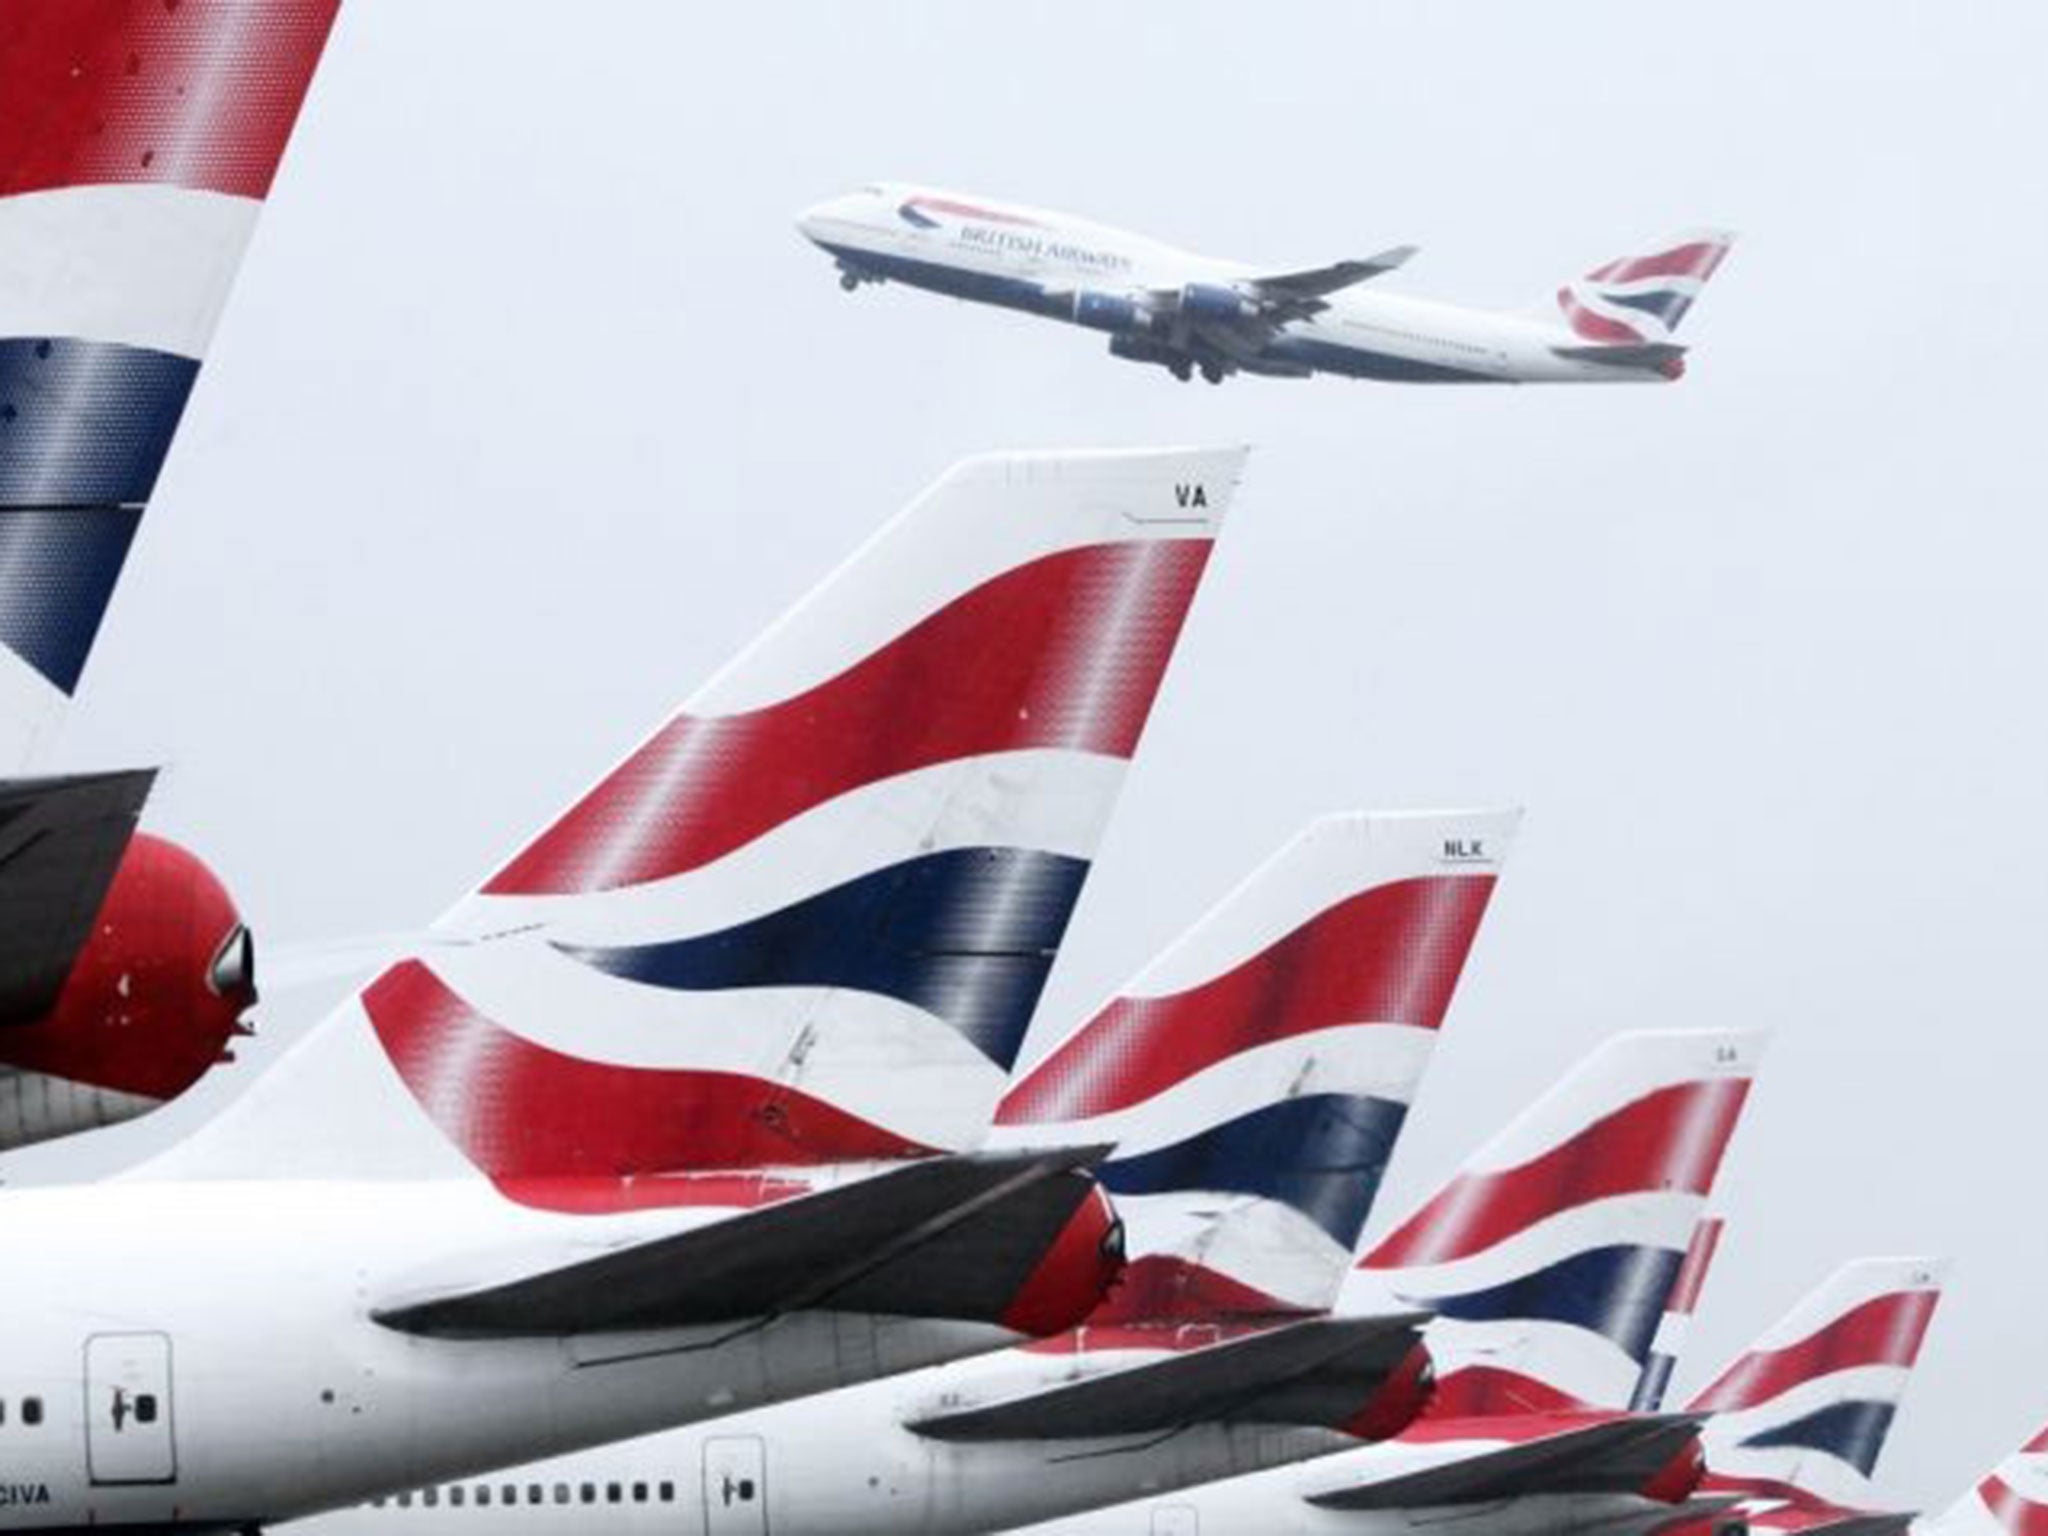 British Airways is offering cut-price Club World tickets to some glamorous destinations